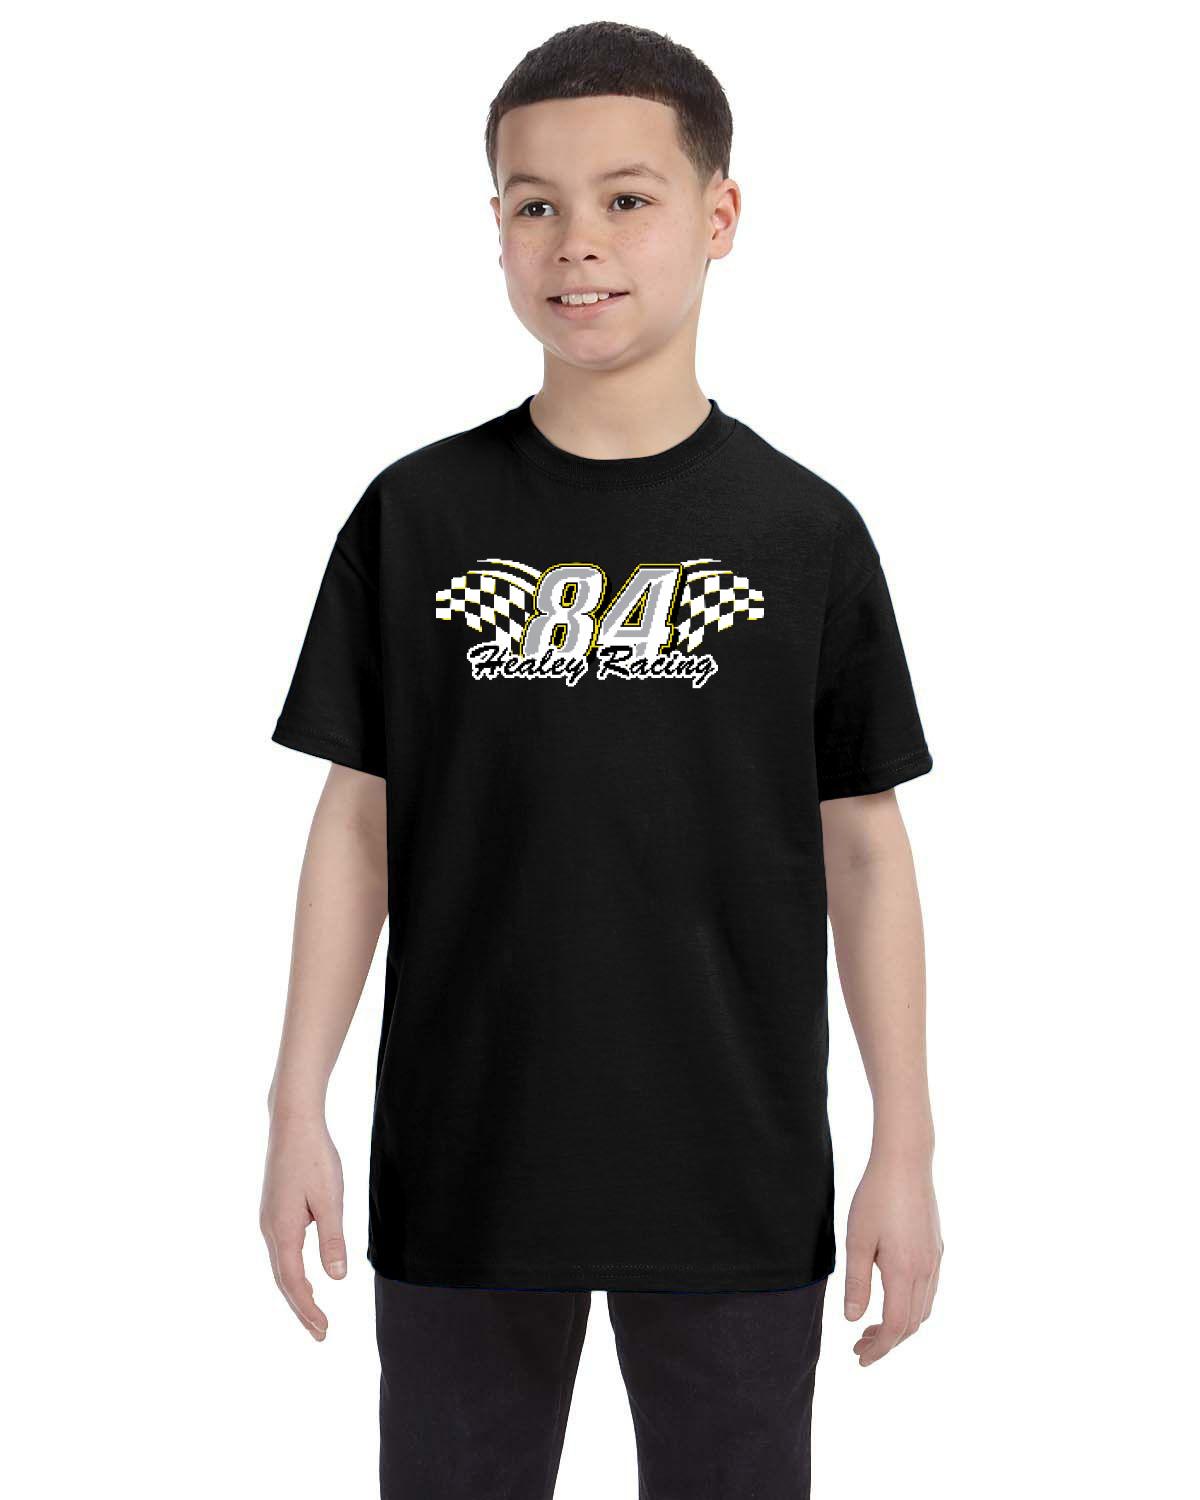 Healy Racing Kid's T-Shirt